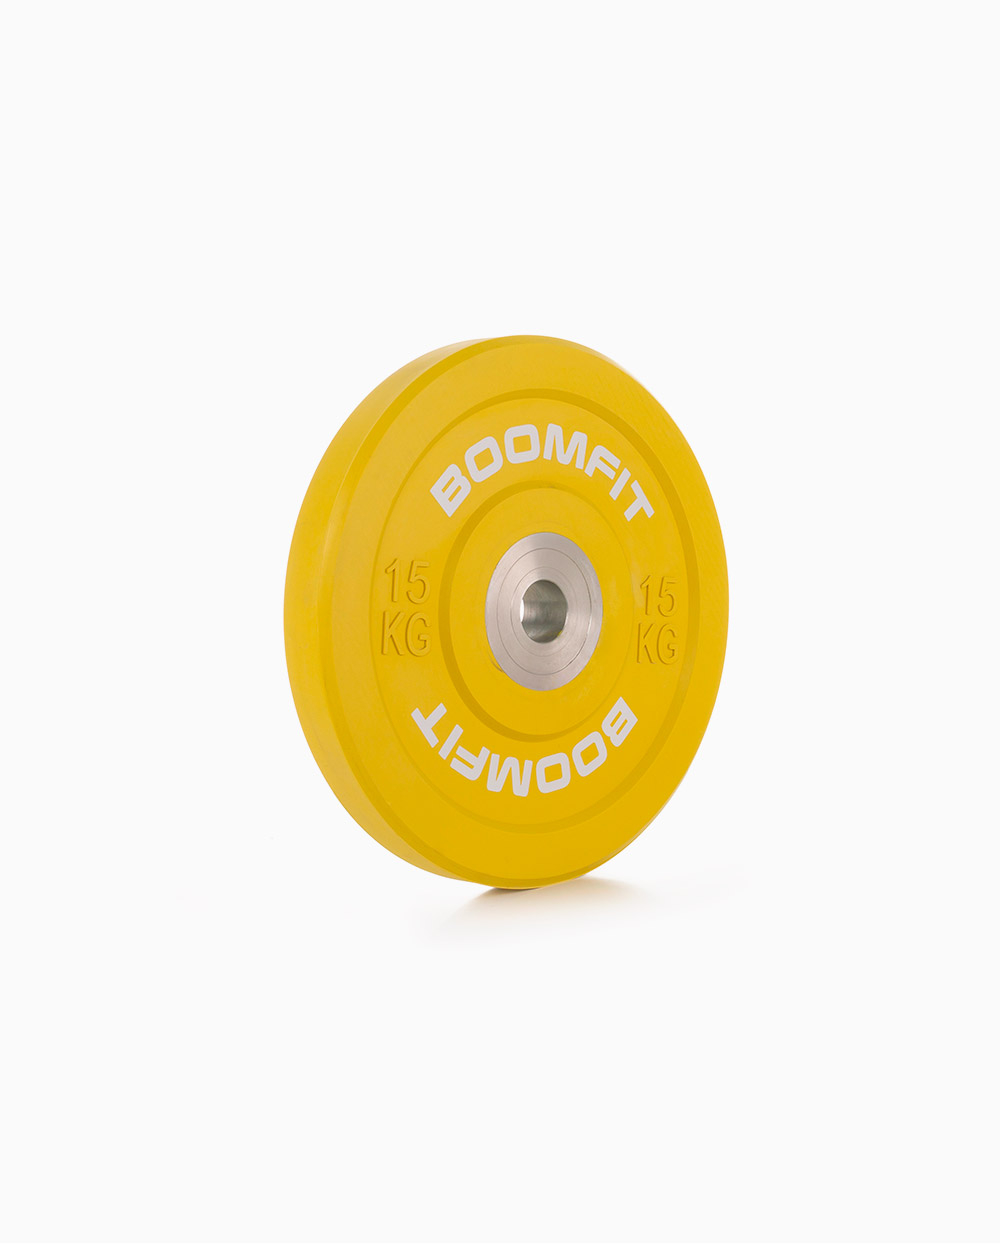 Disco De Competición Boomfit 15kg - amarillo - 